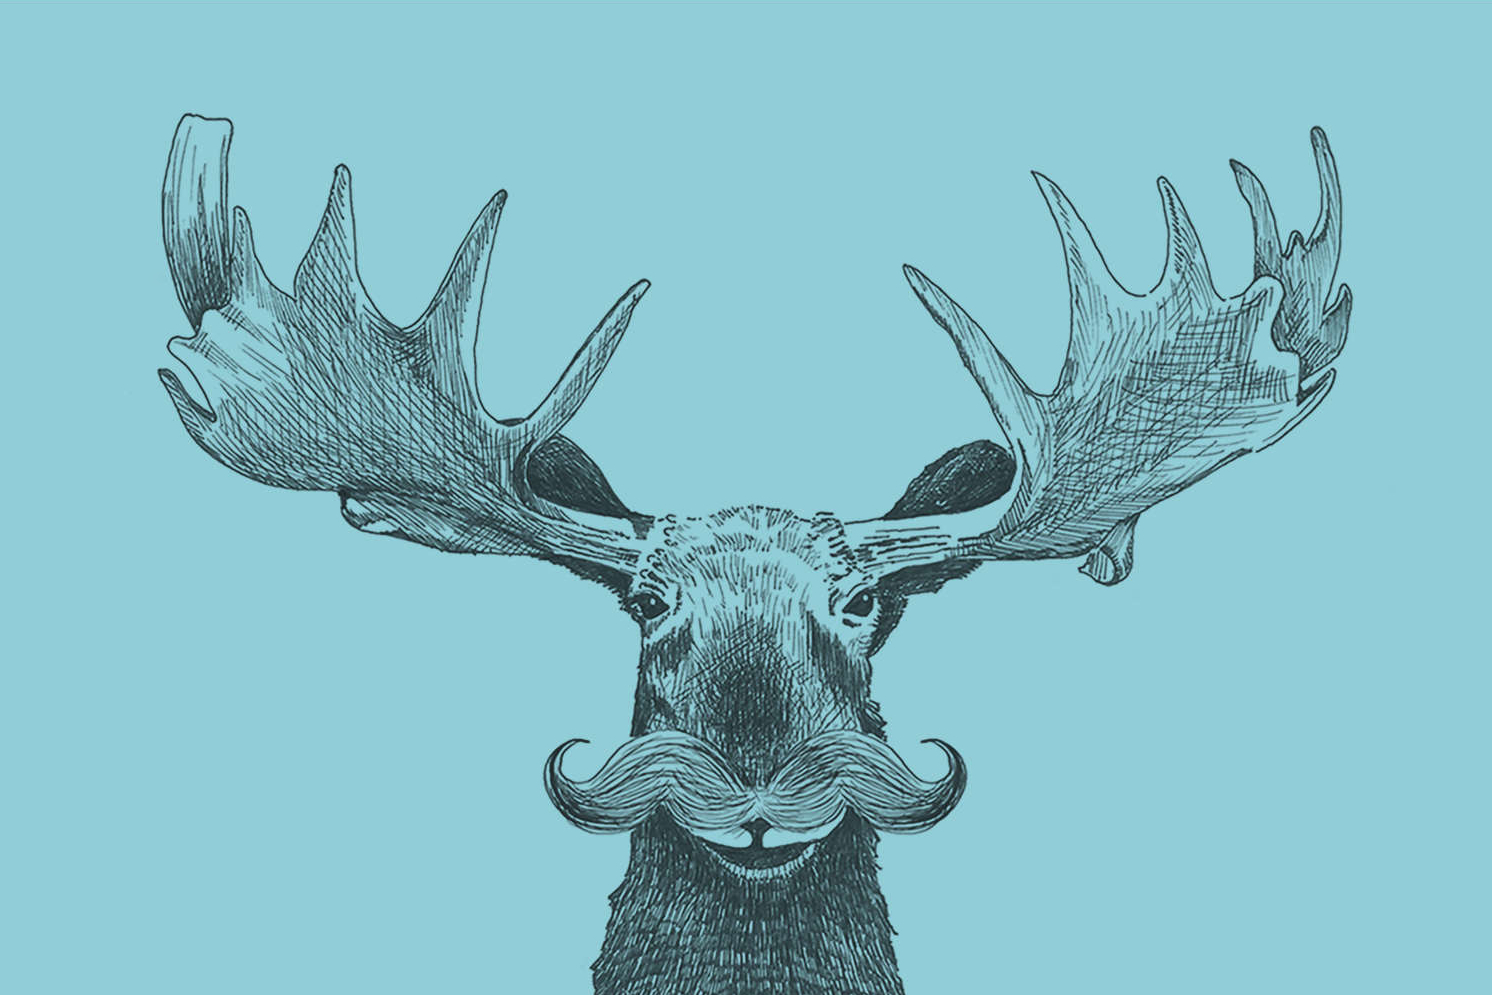 Hand drawn image of a creative moose head facing forward